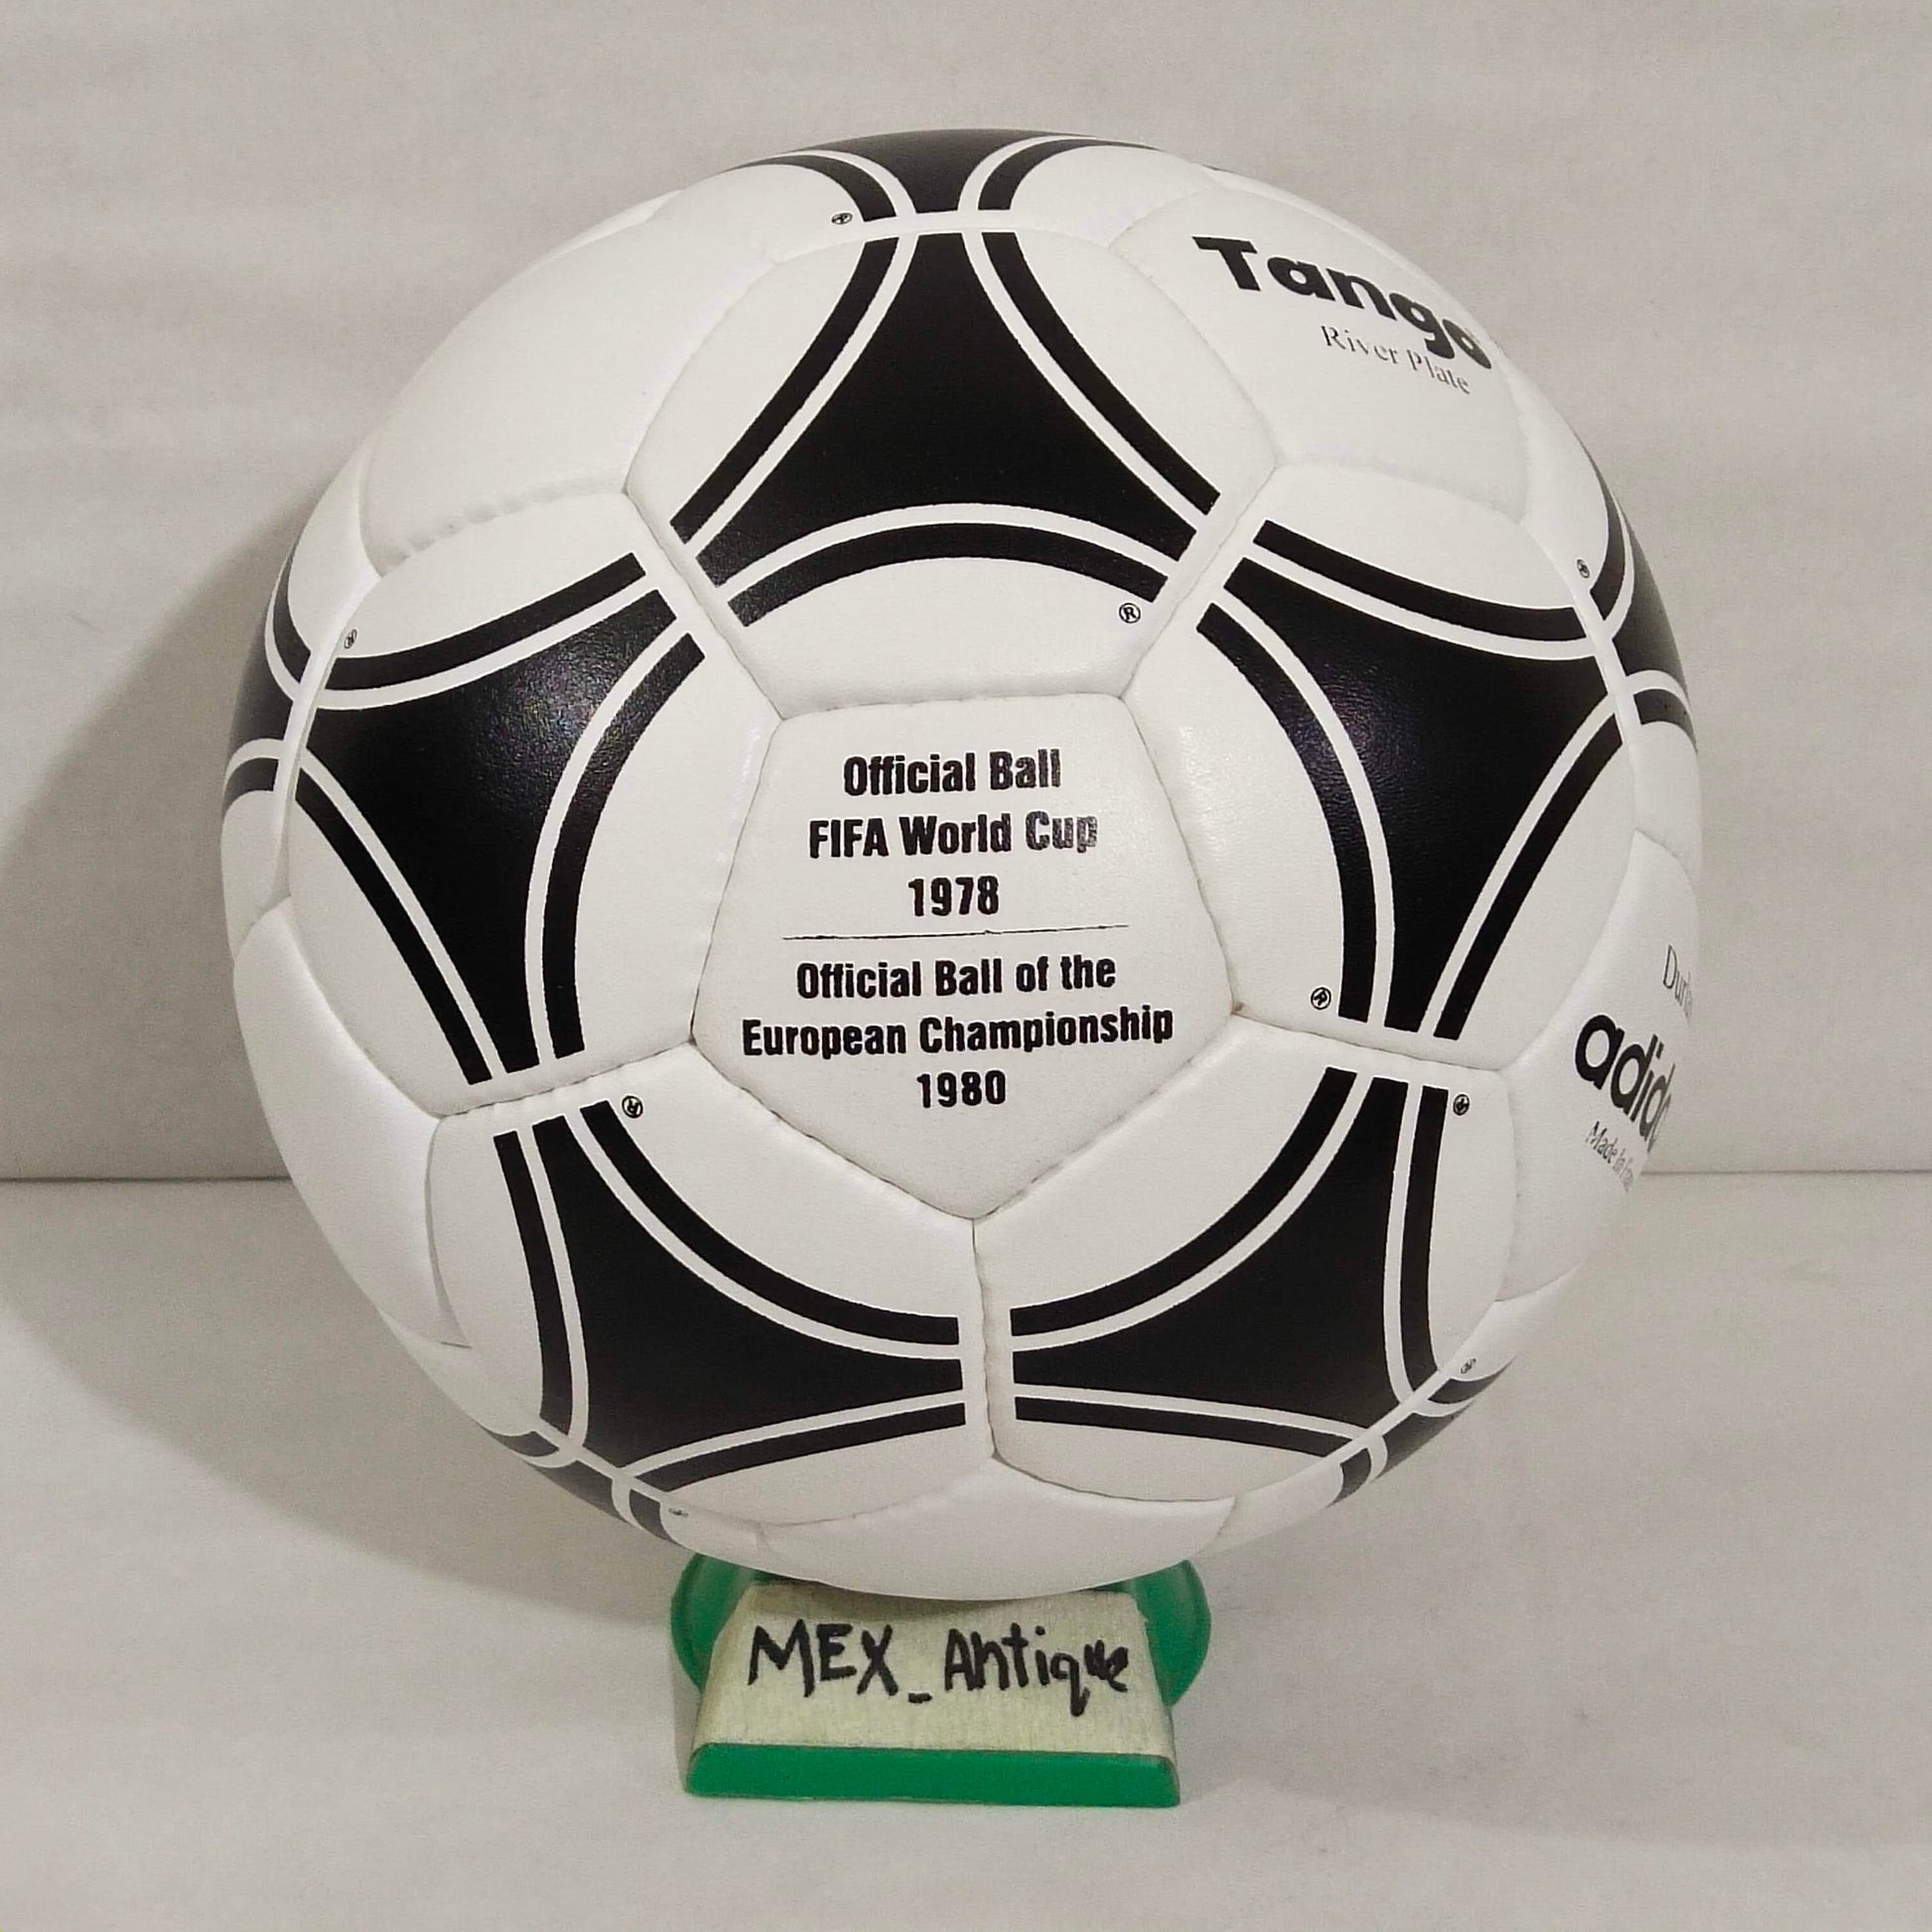 Adidas Tango River Plate | 1980 | UEFA Europa League | Official Match Ball | Size 5 03